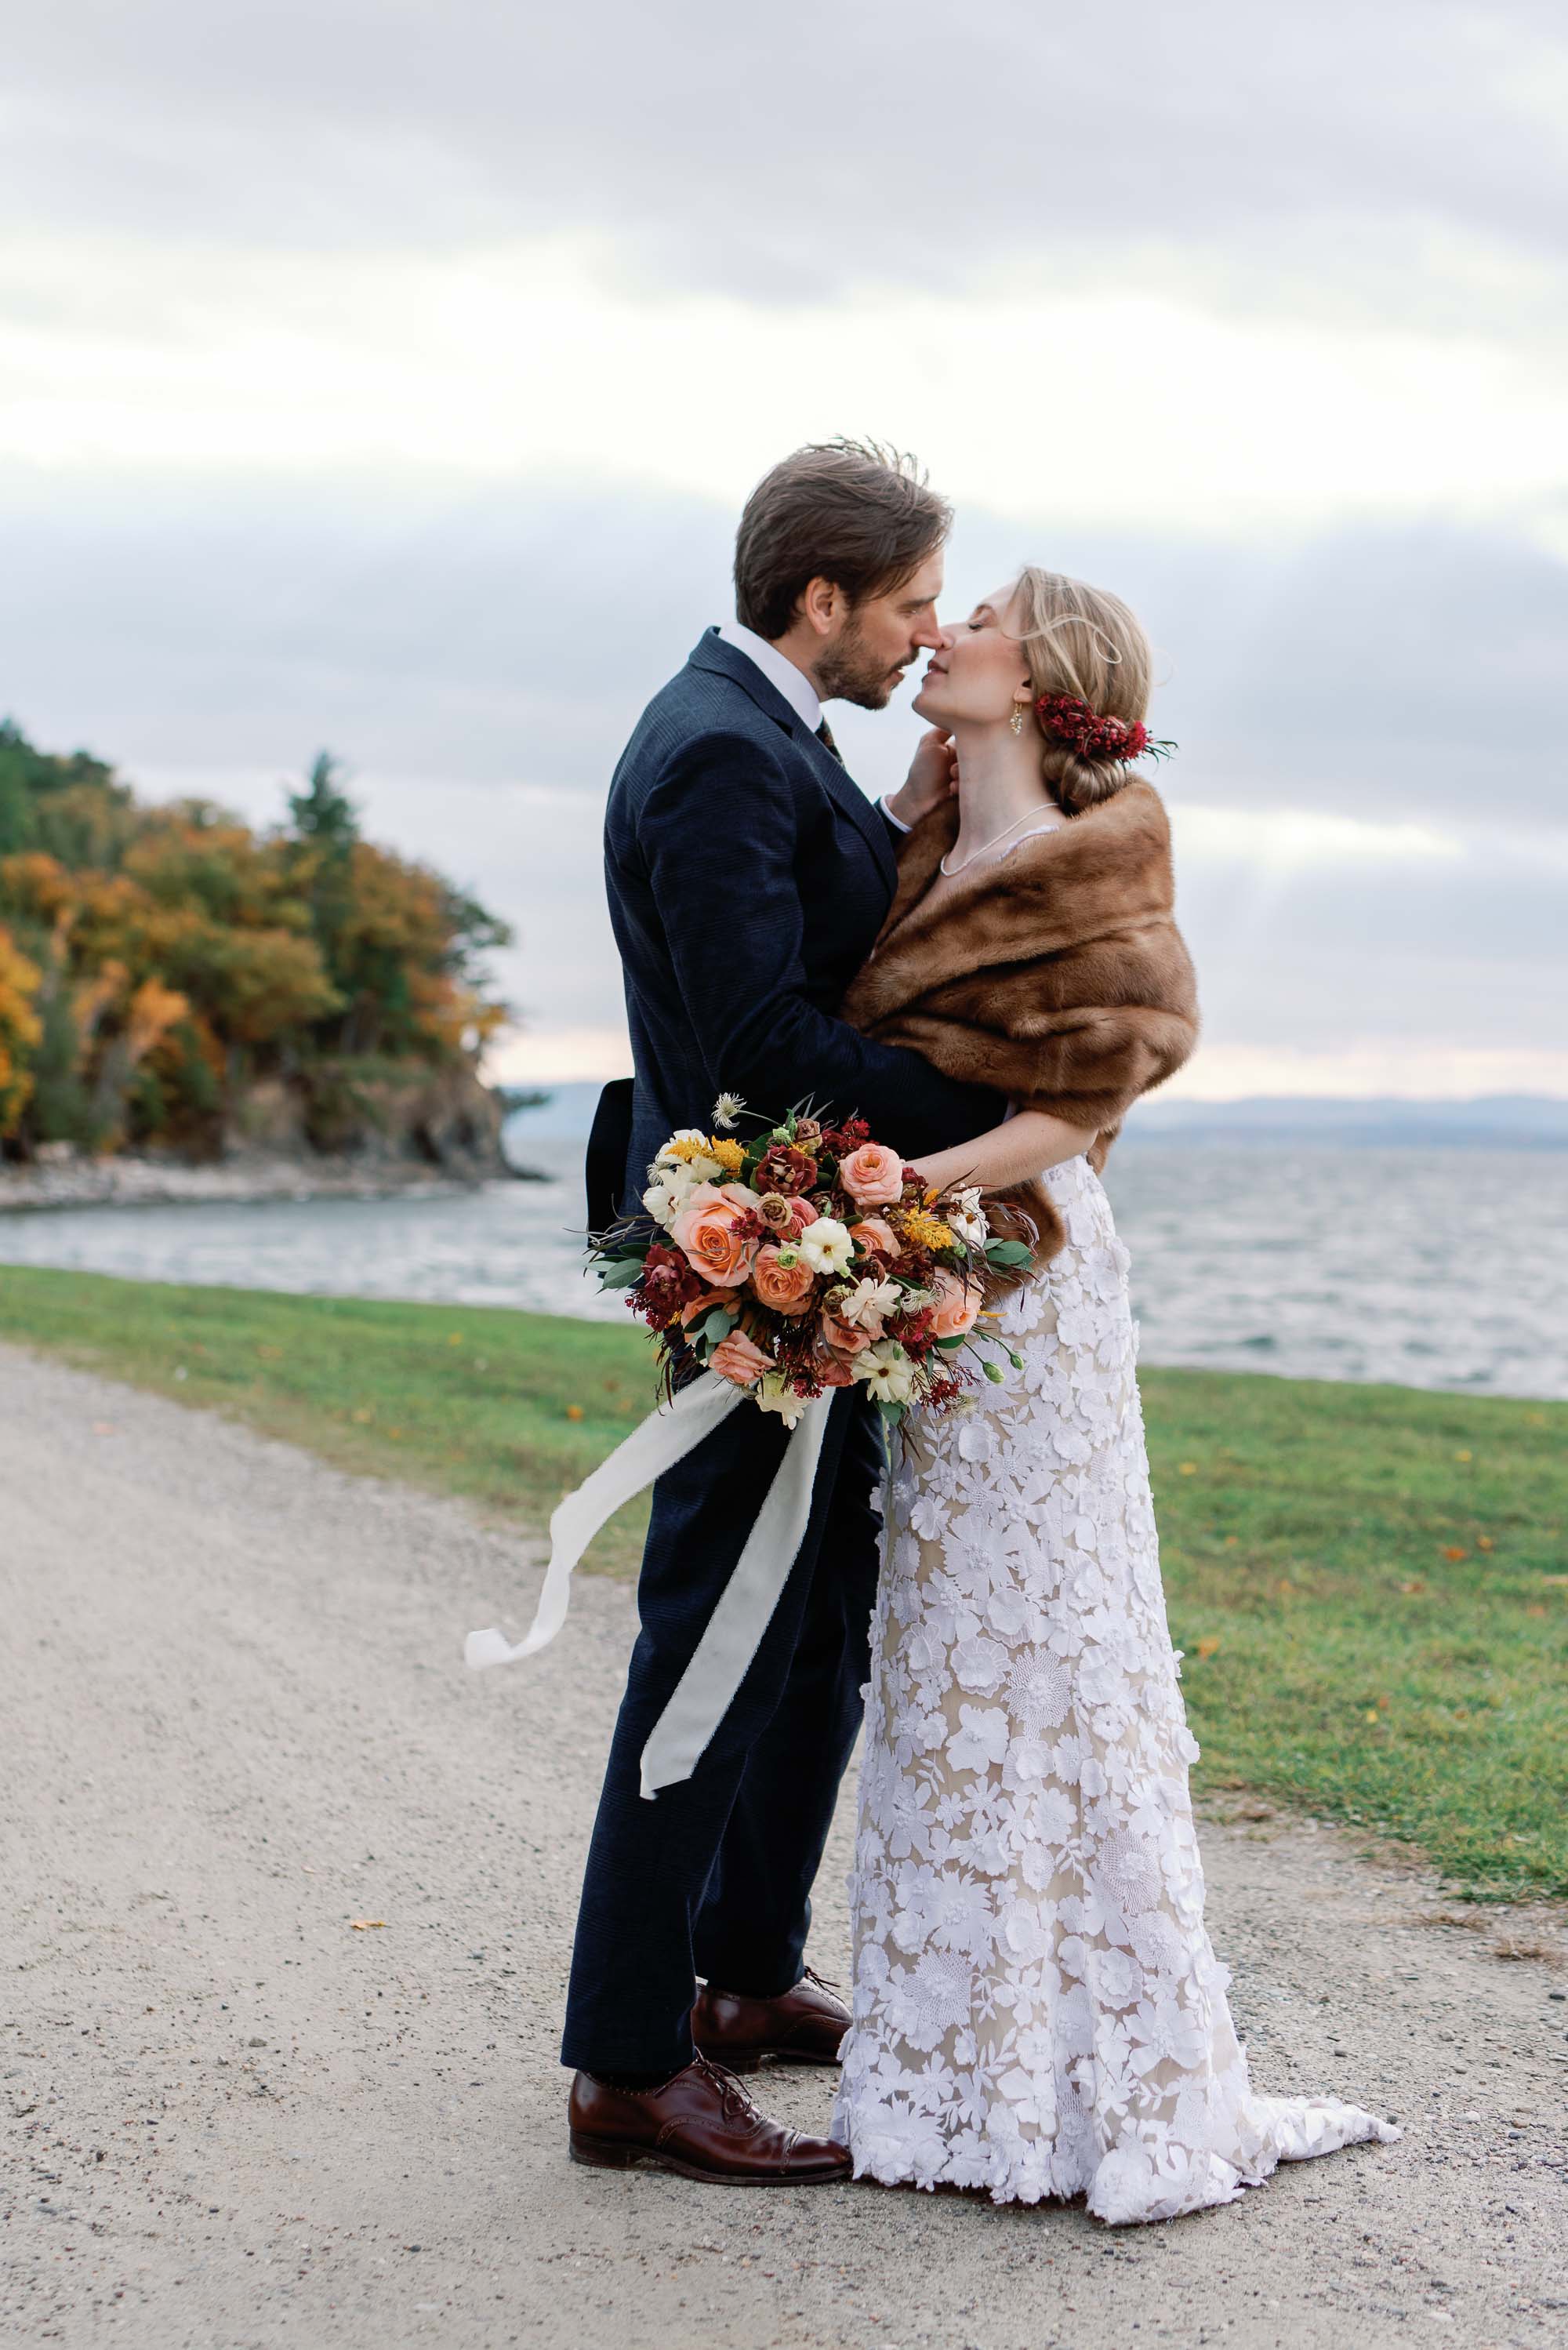 Fall Weddings Across New England to Inspire Your Wedding